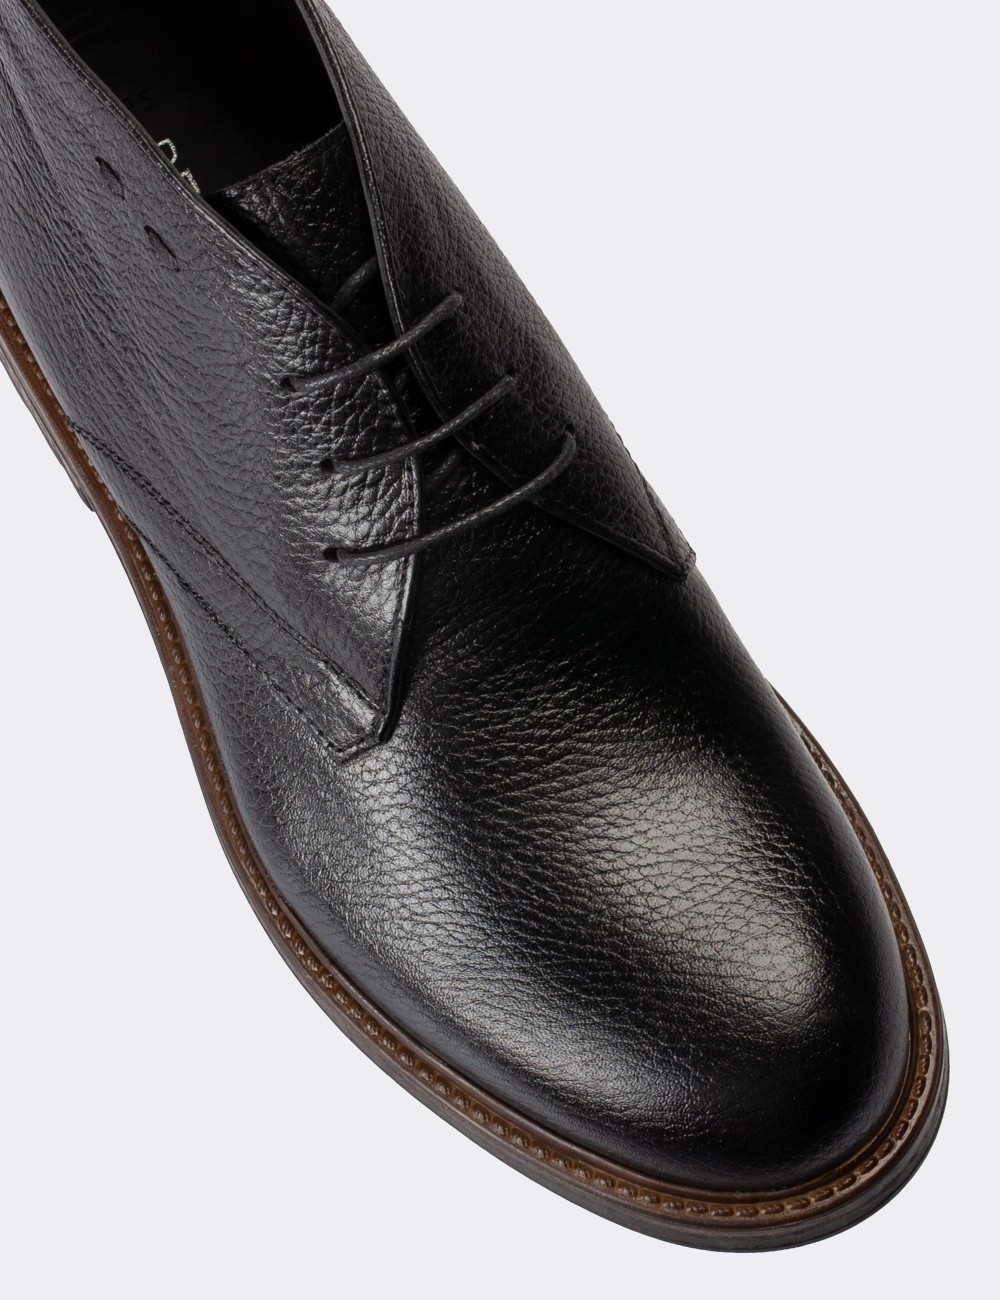 Black  Leather Desert Boots - 01295MSYHC07